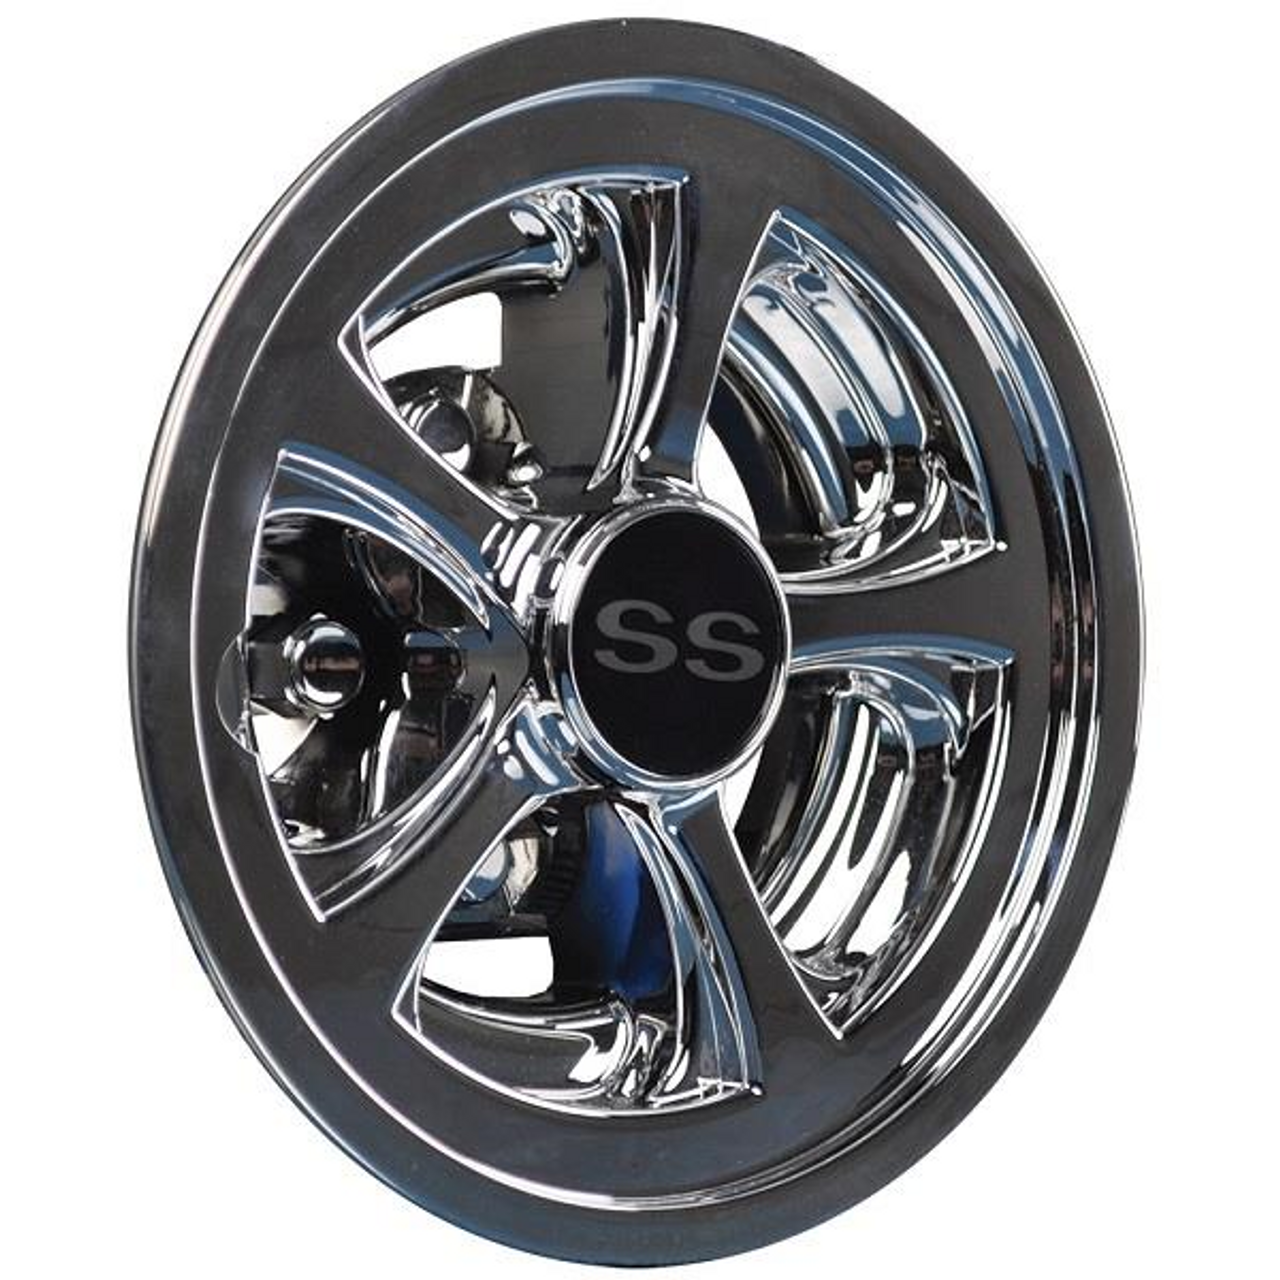 SHIFT 5-Spoke Wheel Cover, SET OF 4 for 8" Steel Wheels, 03-028